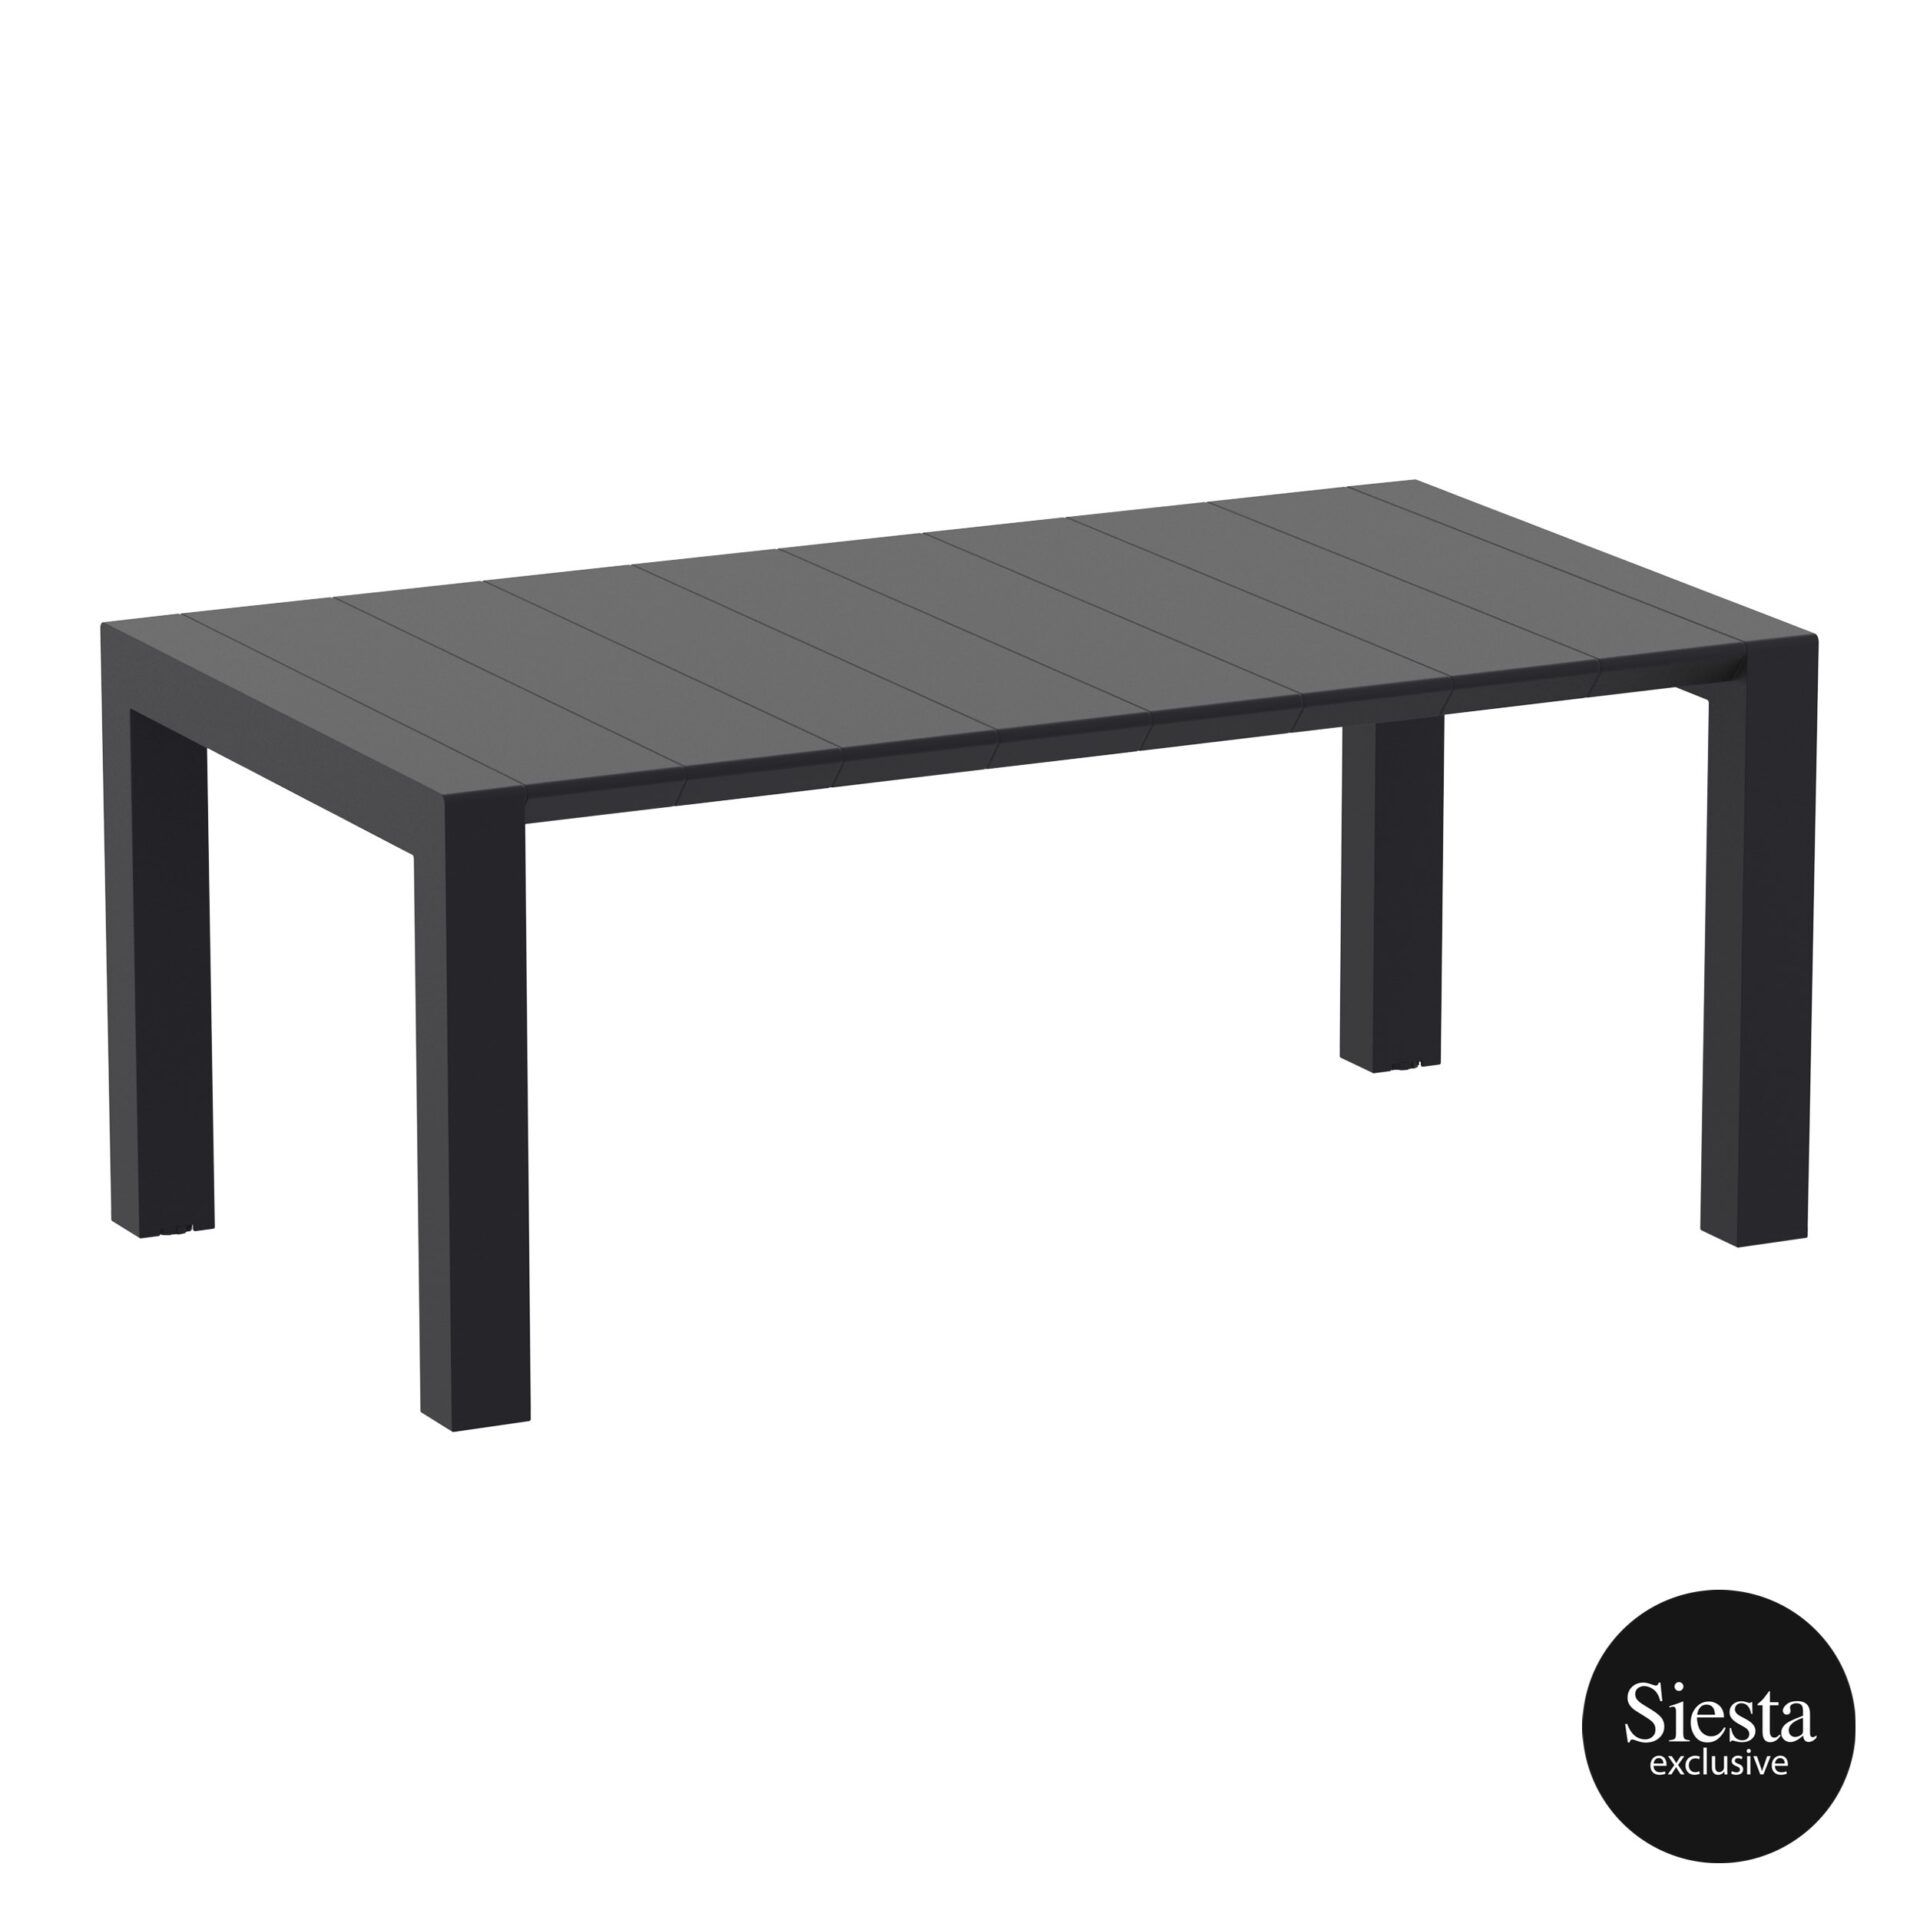 001 vegas table medium 180 black front side 1